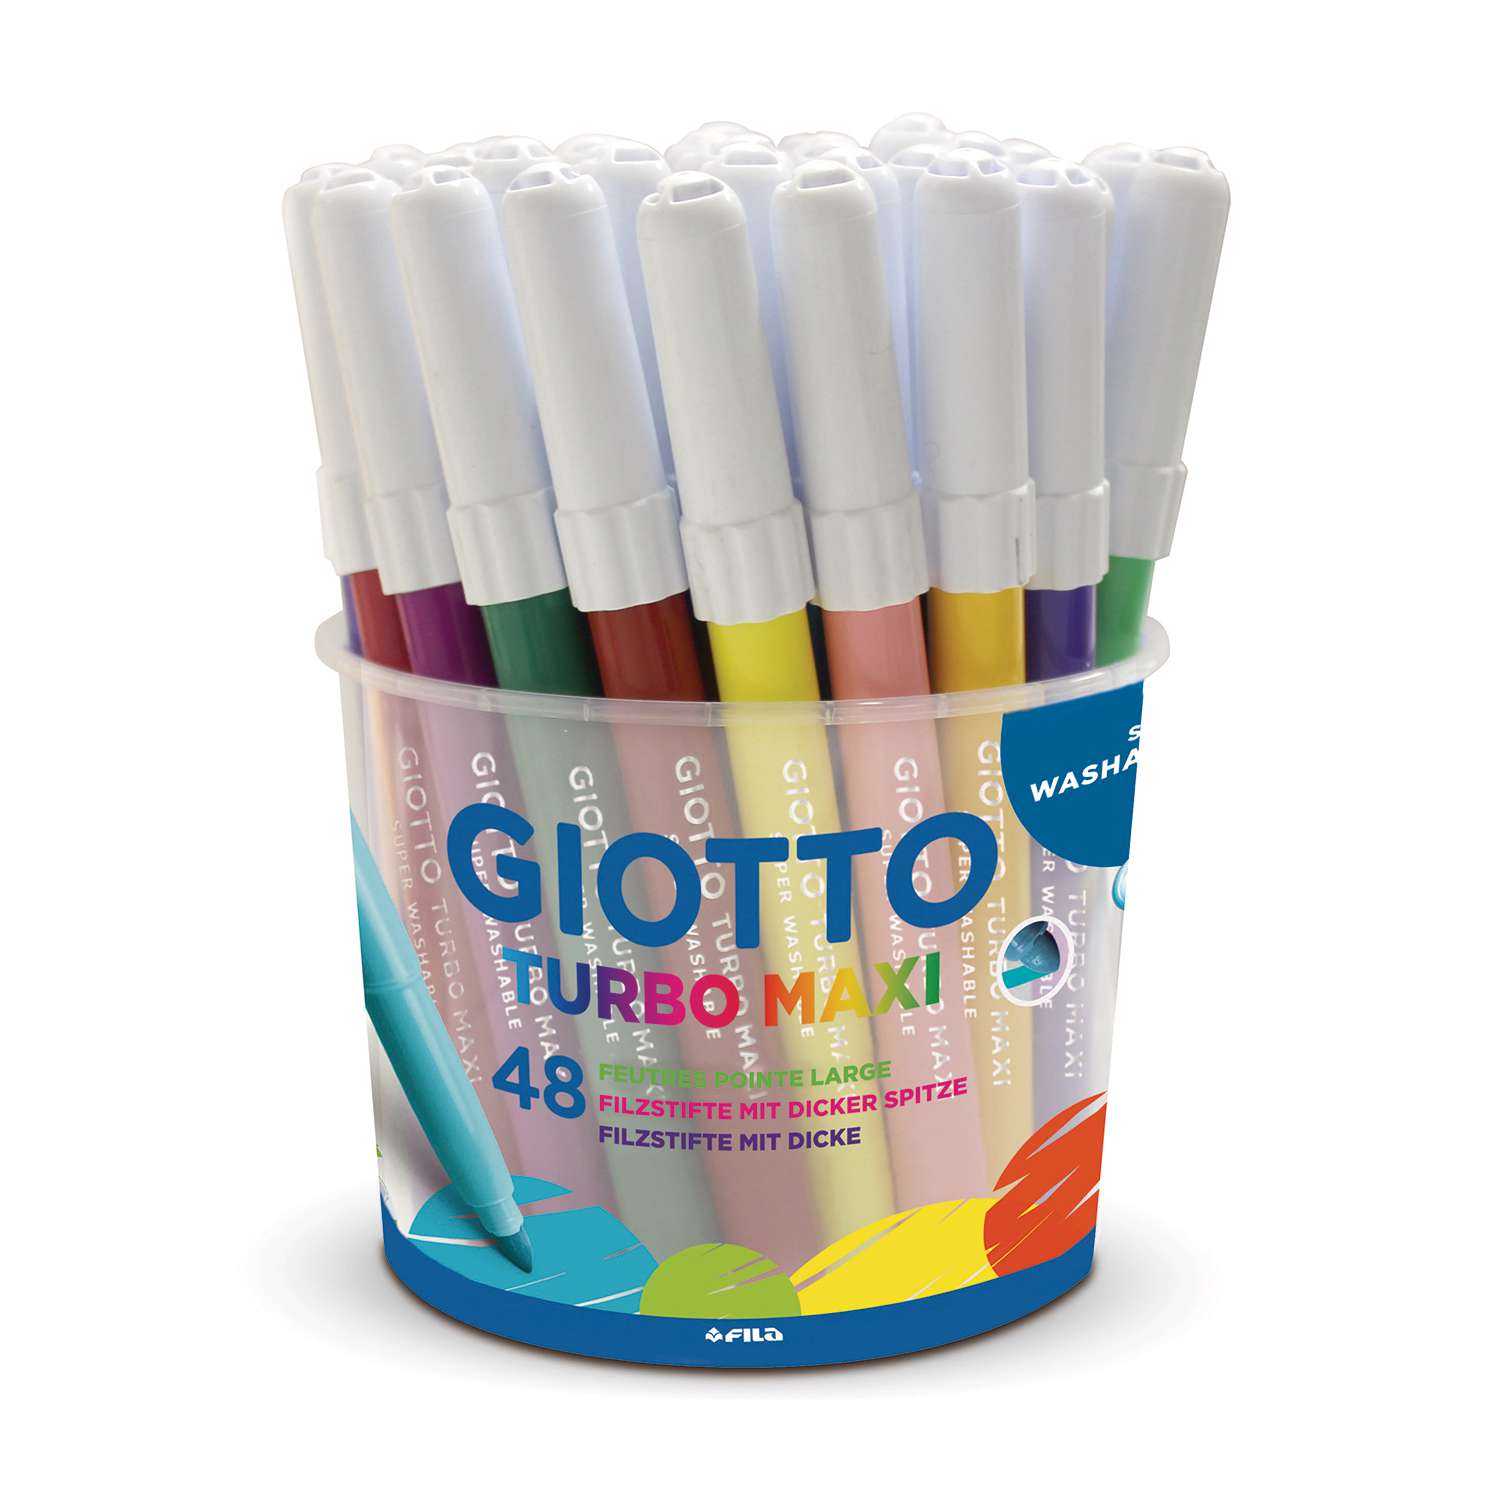 Pennarello Giotto Turbo maxi - Giallo medio 